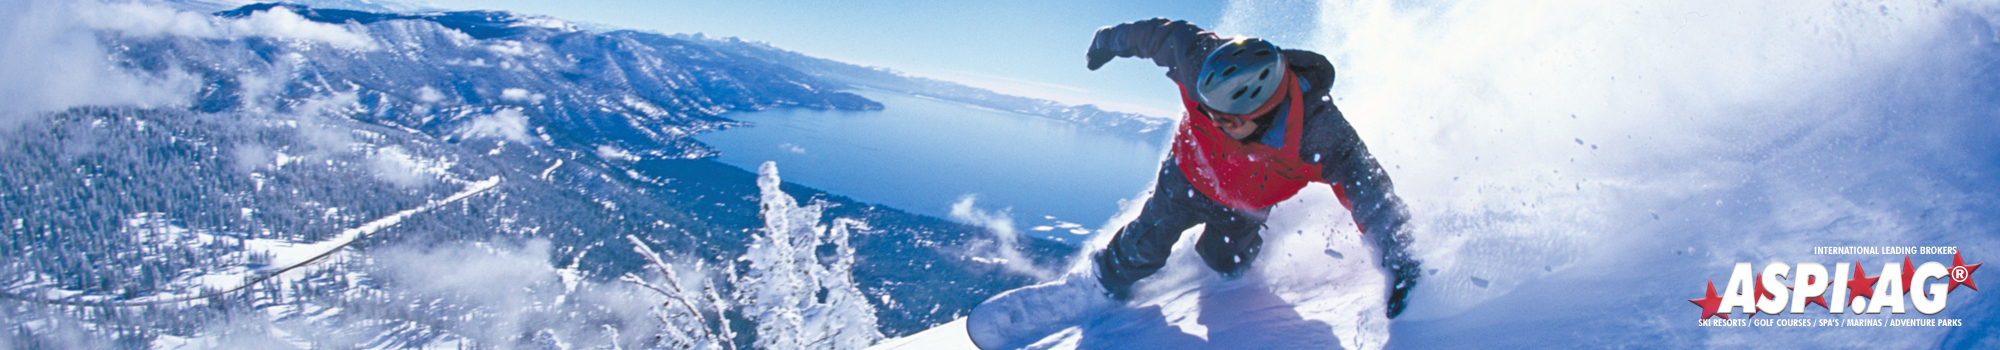 ASP Makler Schigebiete Schiresorts Leading Expert Broker Ski resort sale